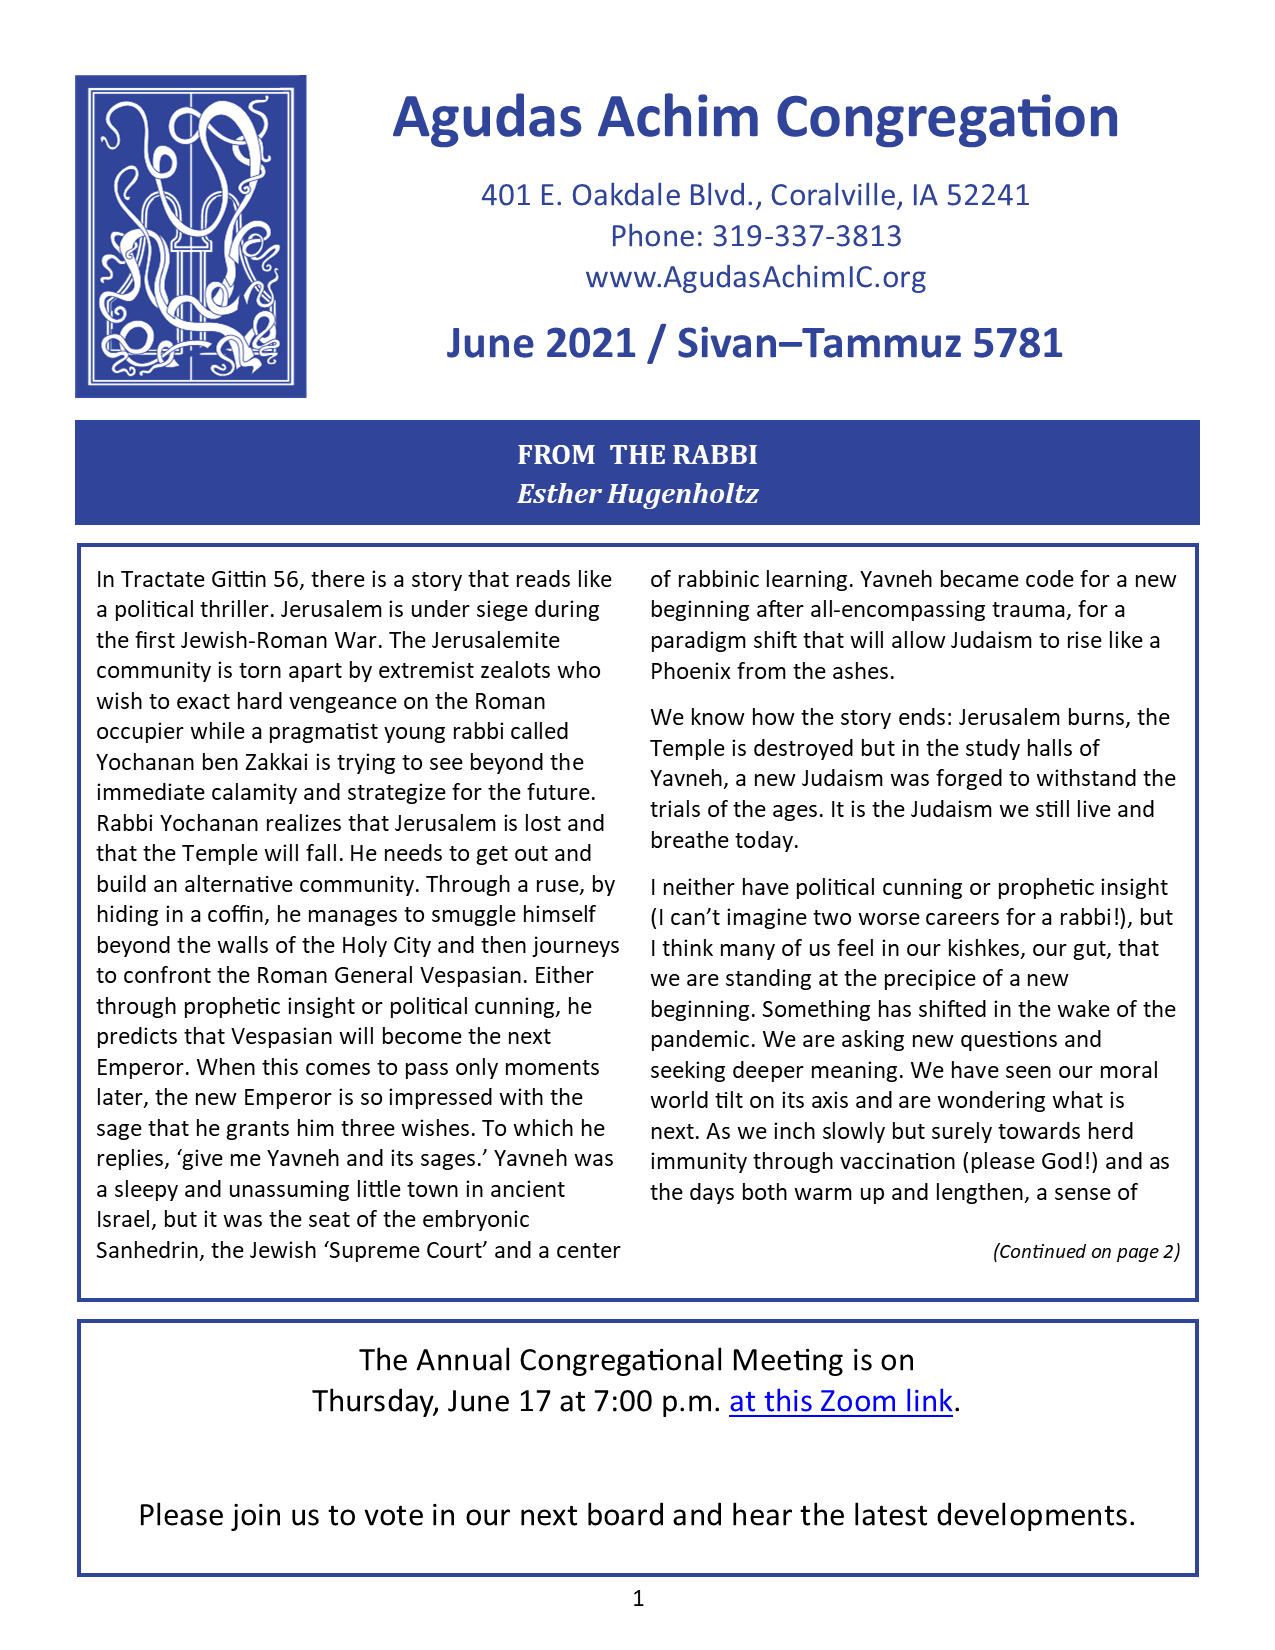 June 2021 Bulletin Cover